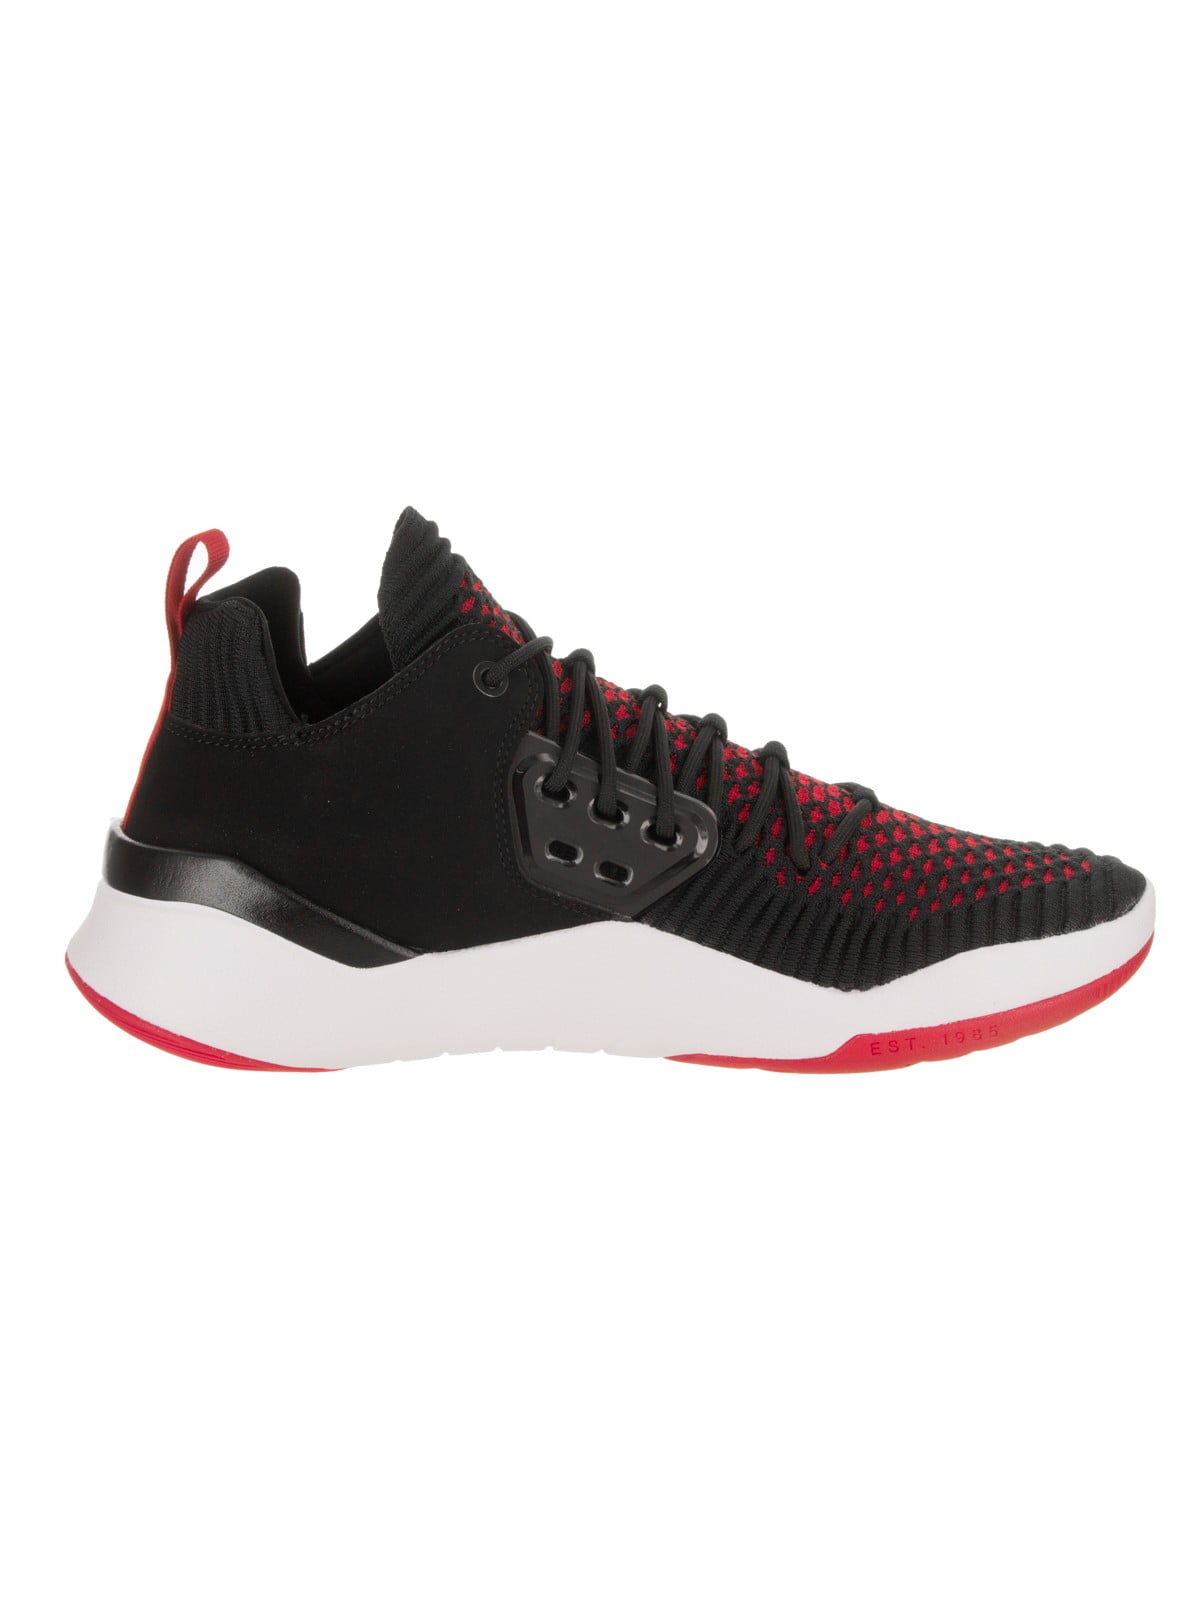 Los Alpes Duquesa Chirrido Nike Jordan Men's Jordan DNA LX Basketball Shoe - Walmart.com